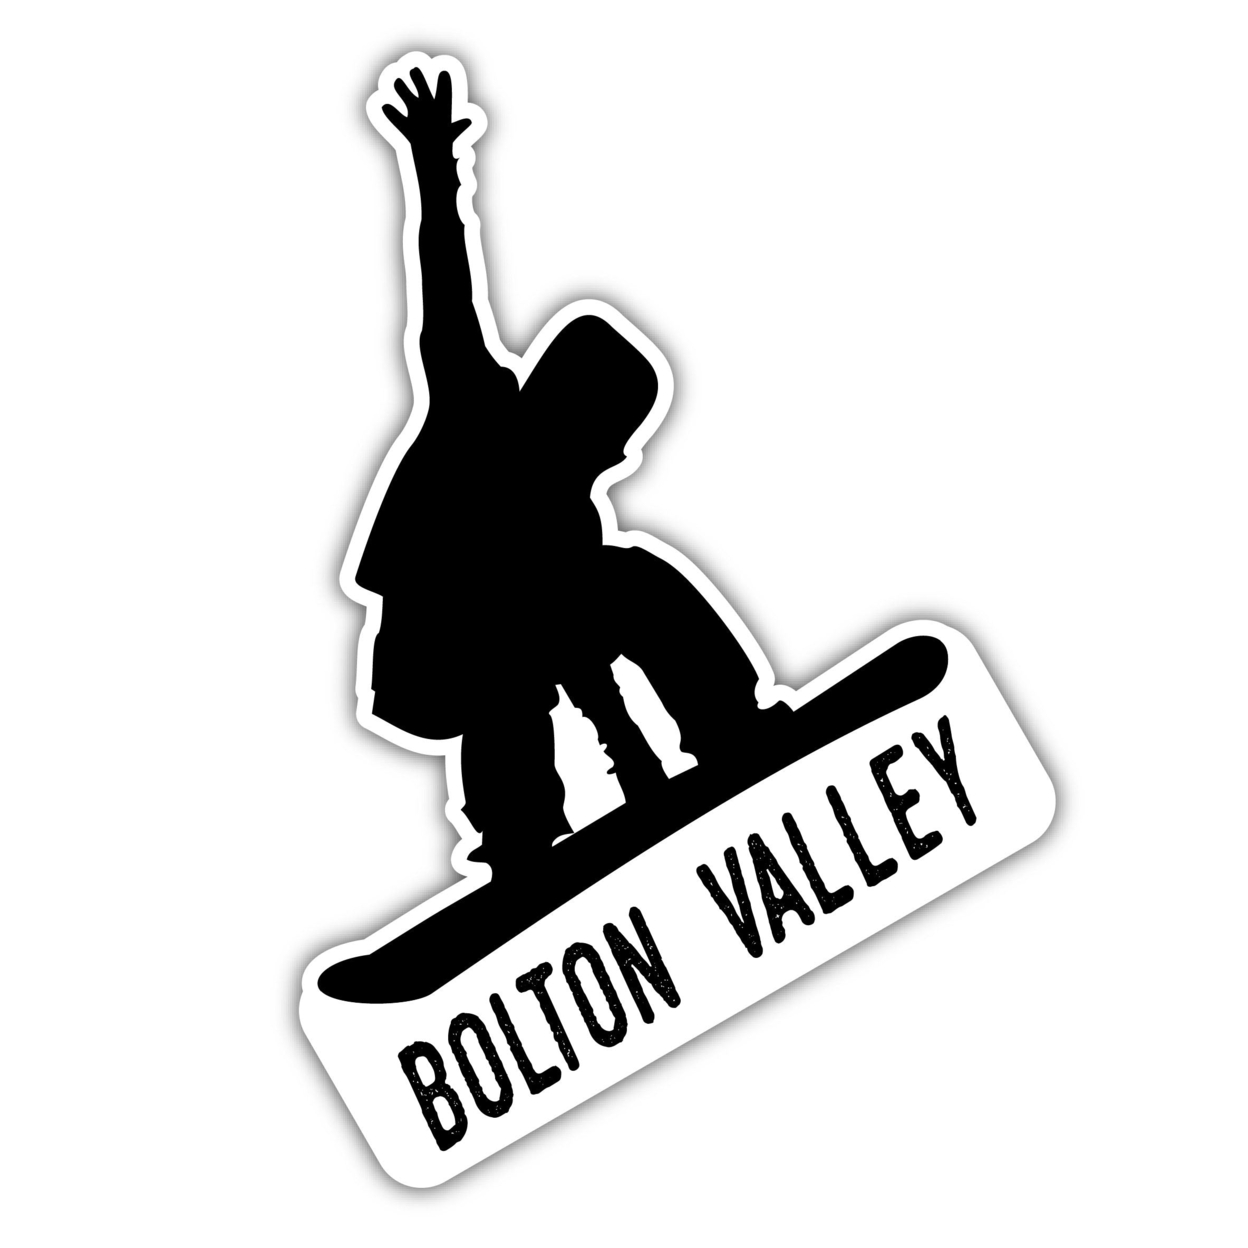 Bolton Valley Vermont Ski Adventures Souvenir Approximately 5 X 2.5-Inch Vinyl Decal Sticker Goggle Design